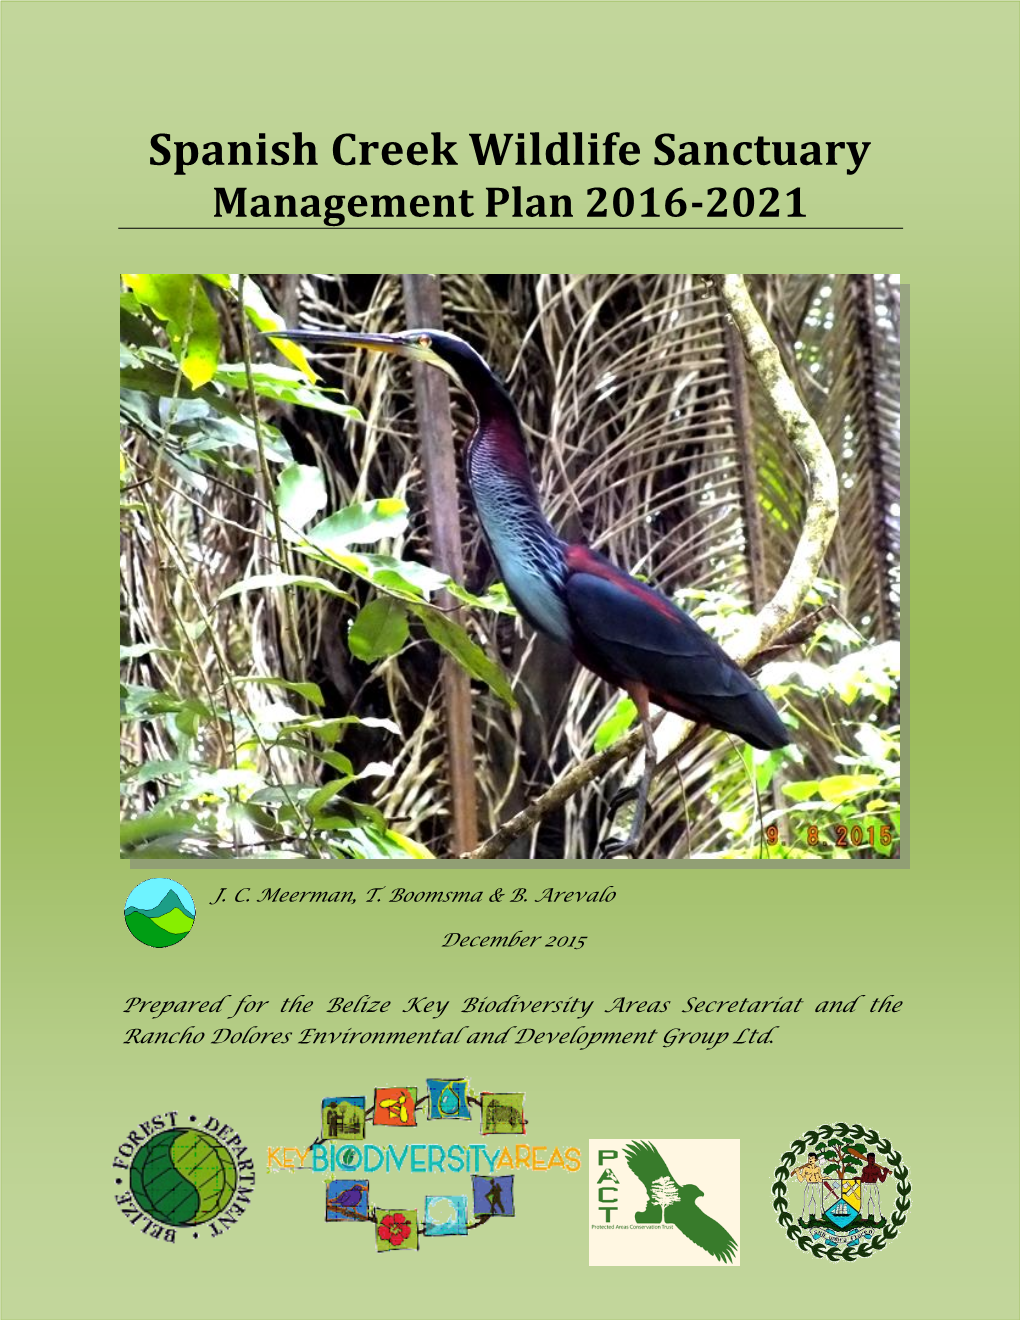 Spanish Creek Wildlife Sanctuary Management Plan 2016-2021